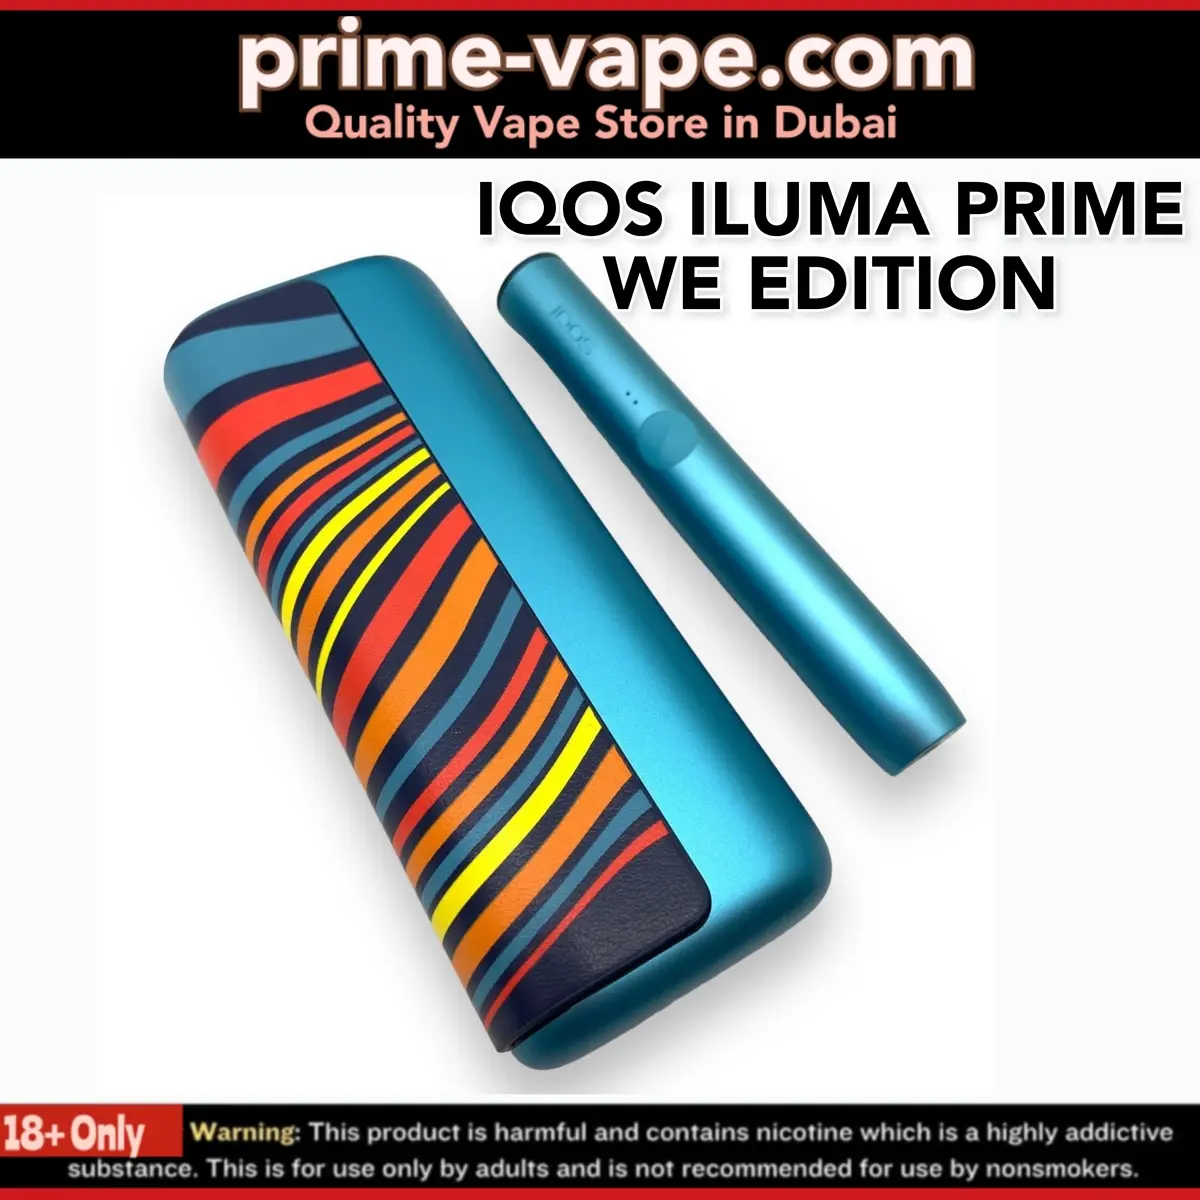 New IQOS ILUMA Prime Gold Kit in Dubai UAE - vape uae